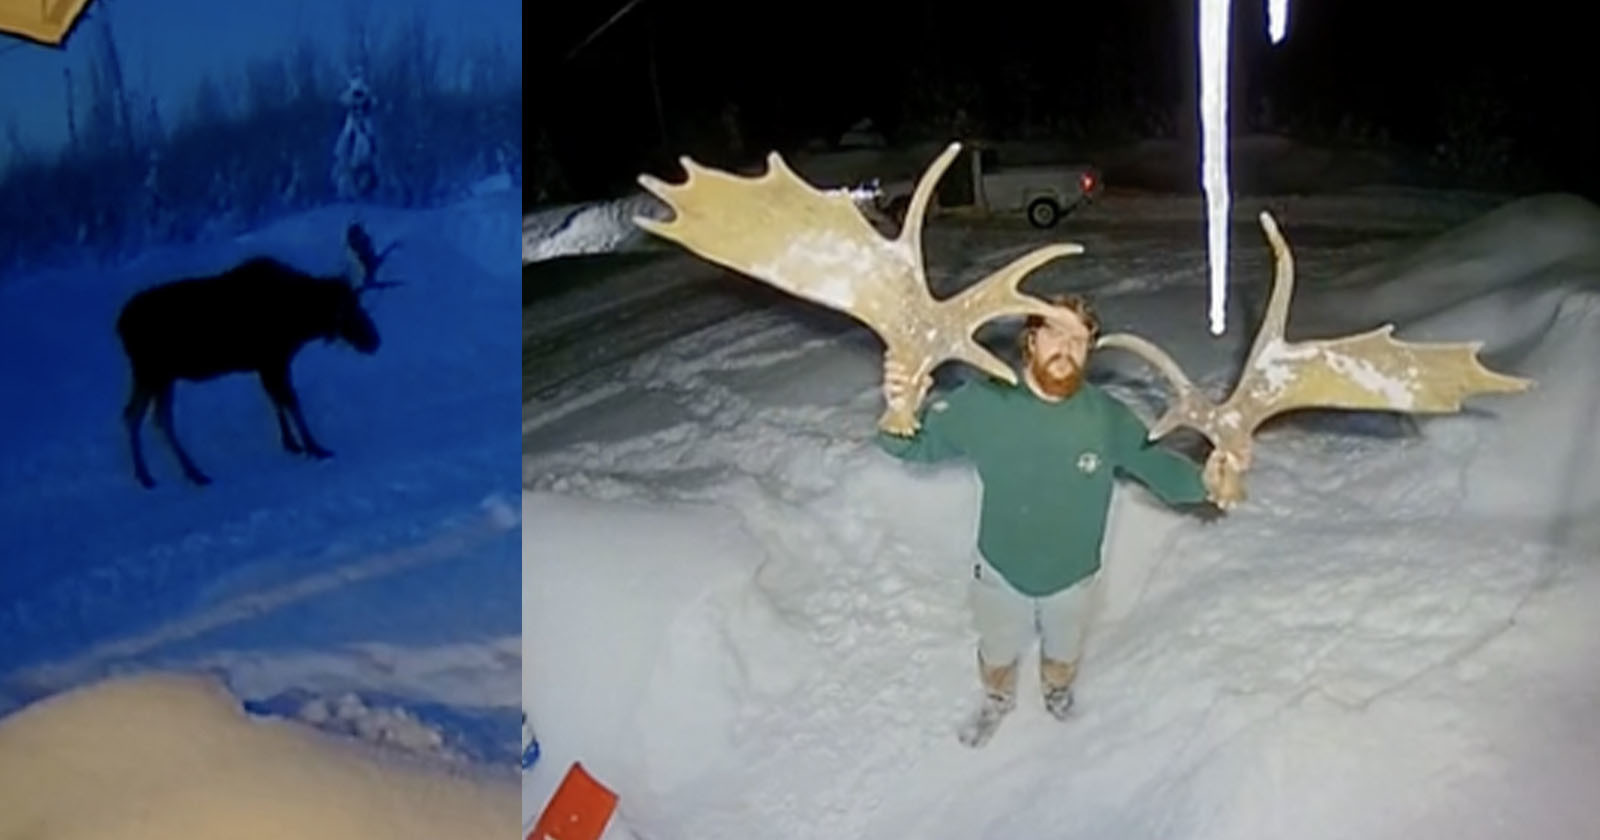  ring doorbell camera captures rare moment moose sheds 